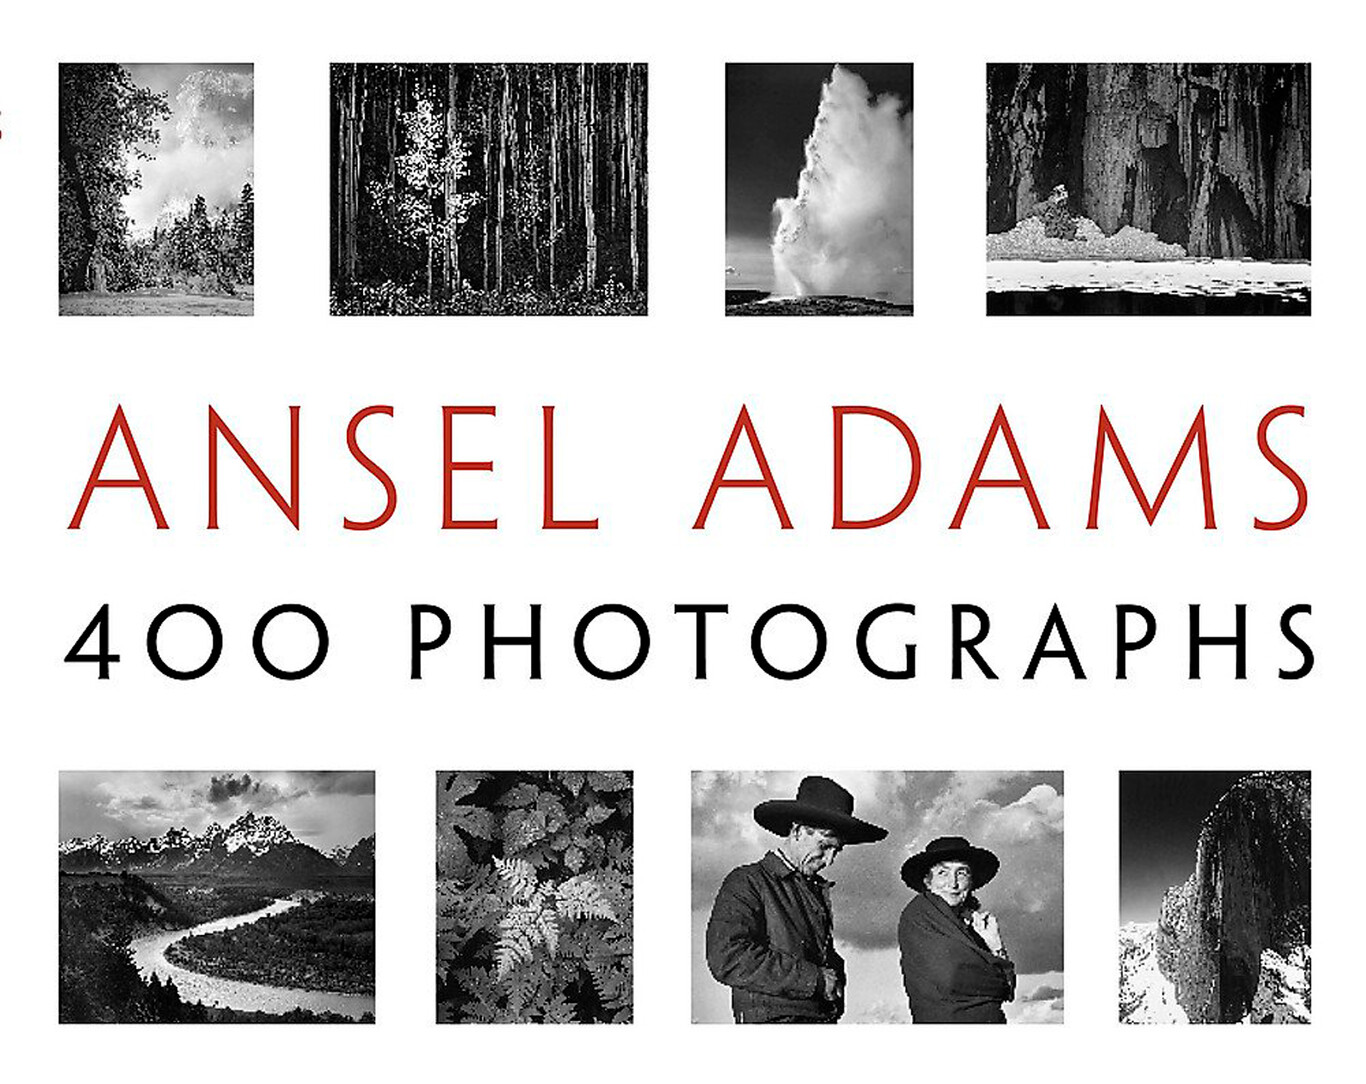 '400 Photographs' by Ansel Adams